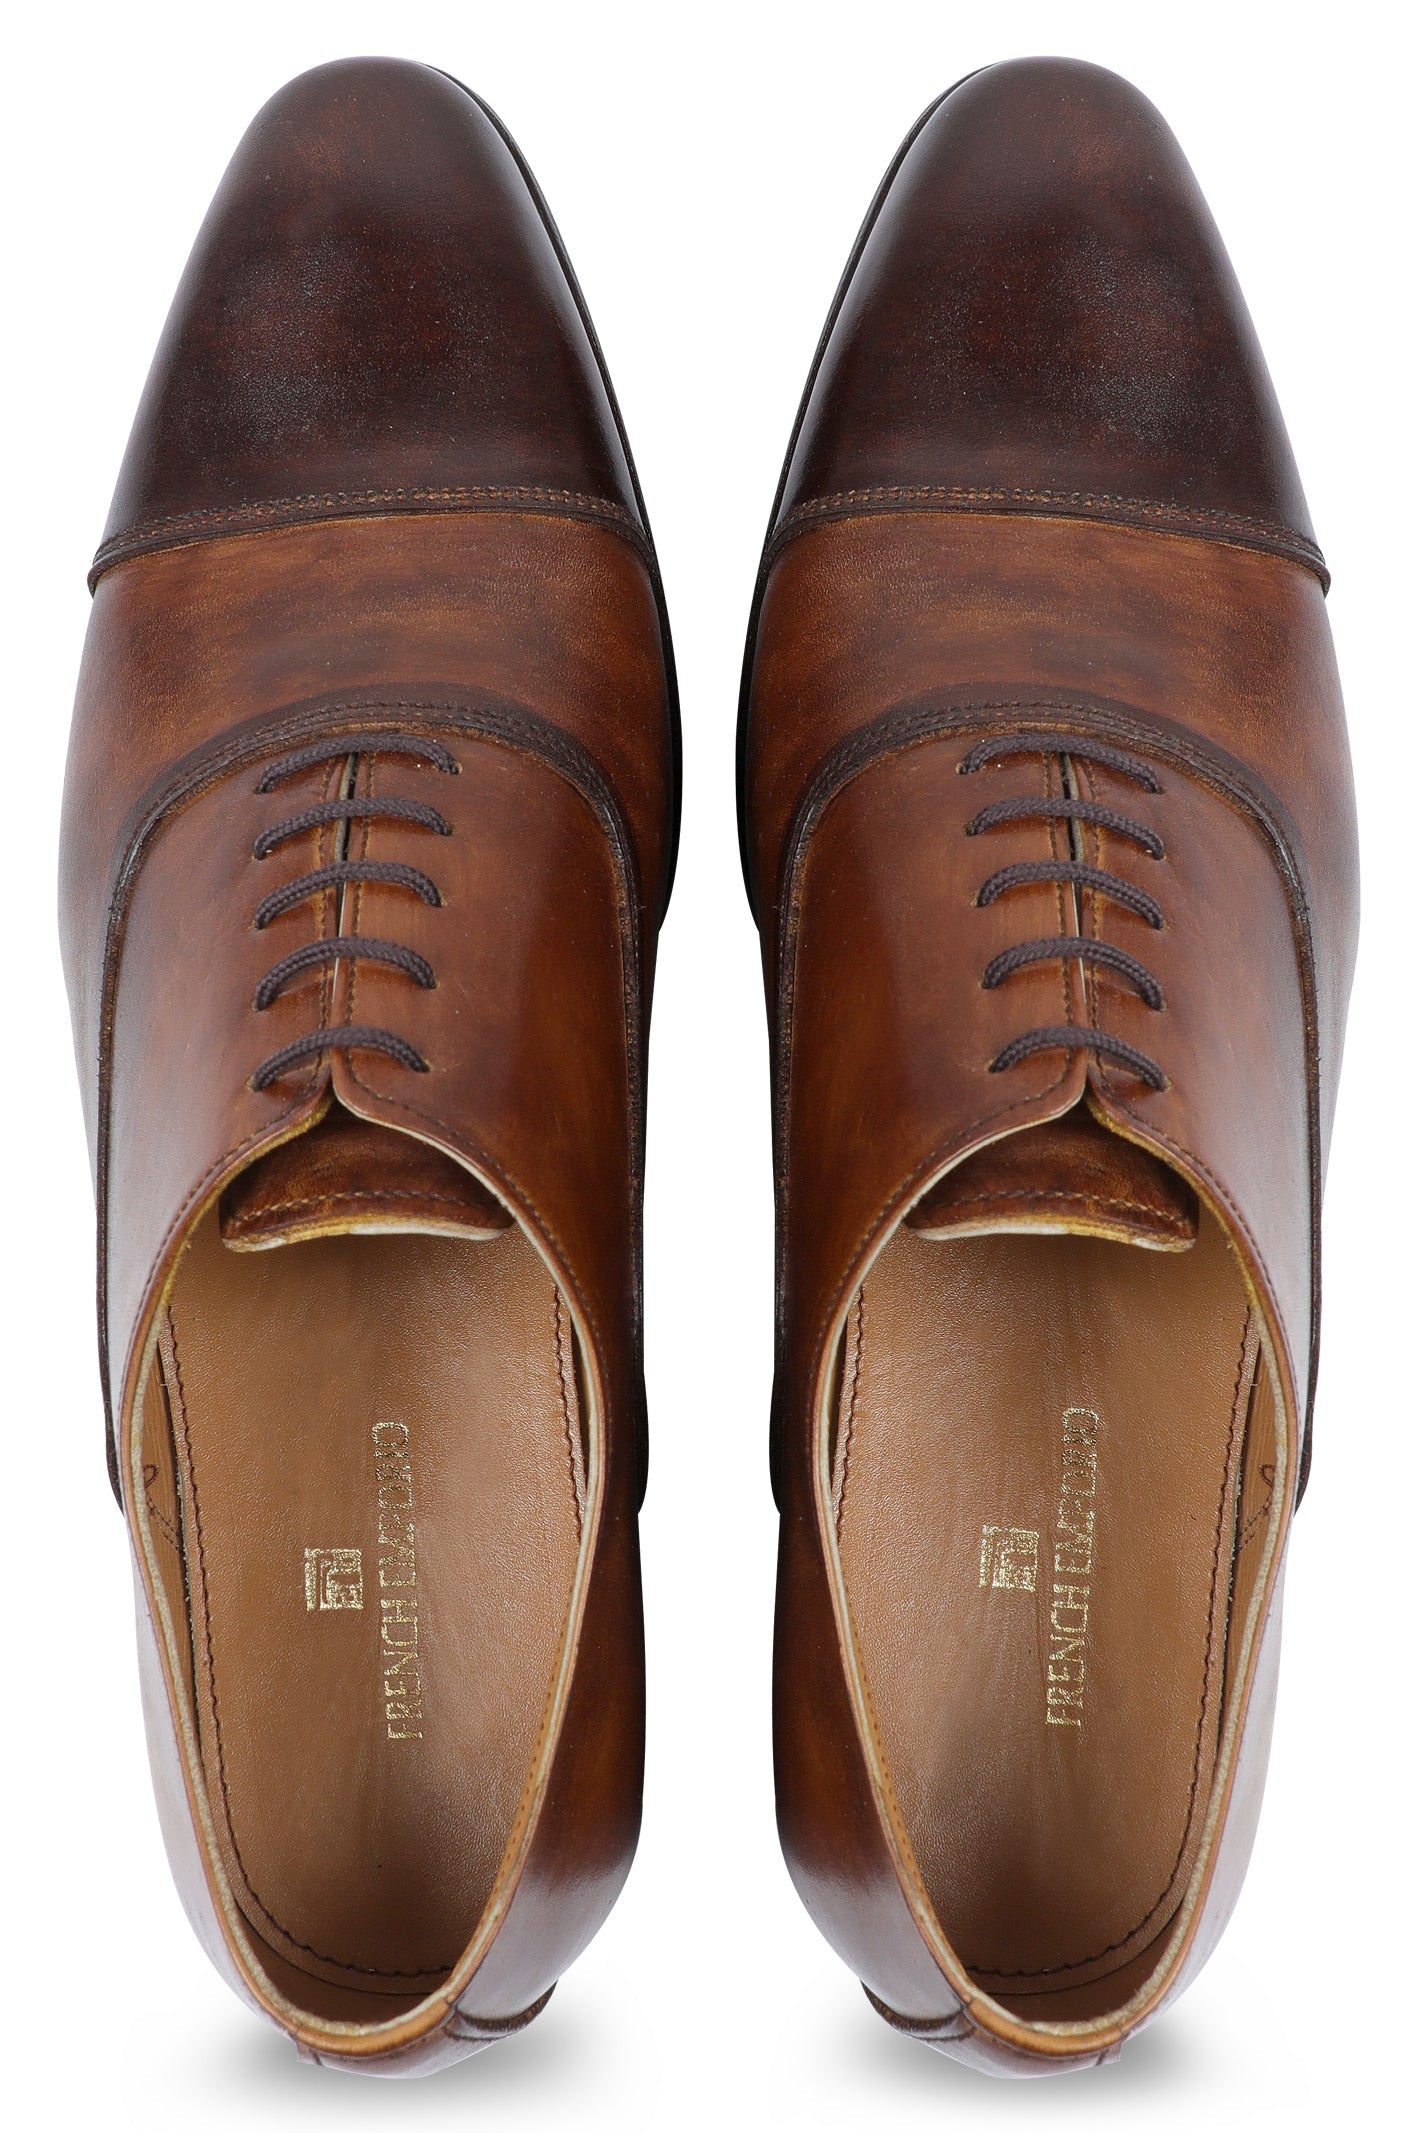 Formal Shoes For Men in Brown SKU: SMF-0161-BROWN - Diners